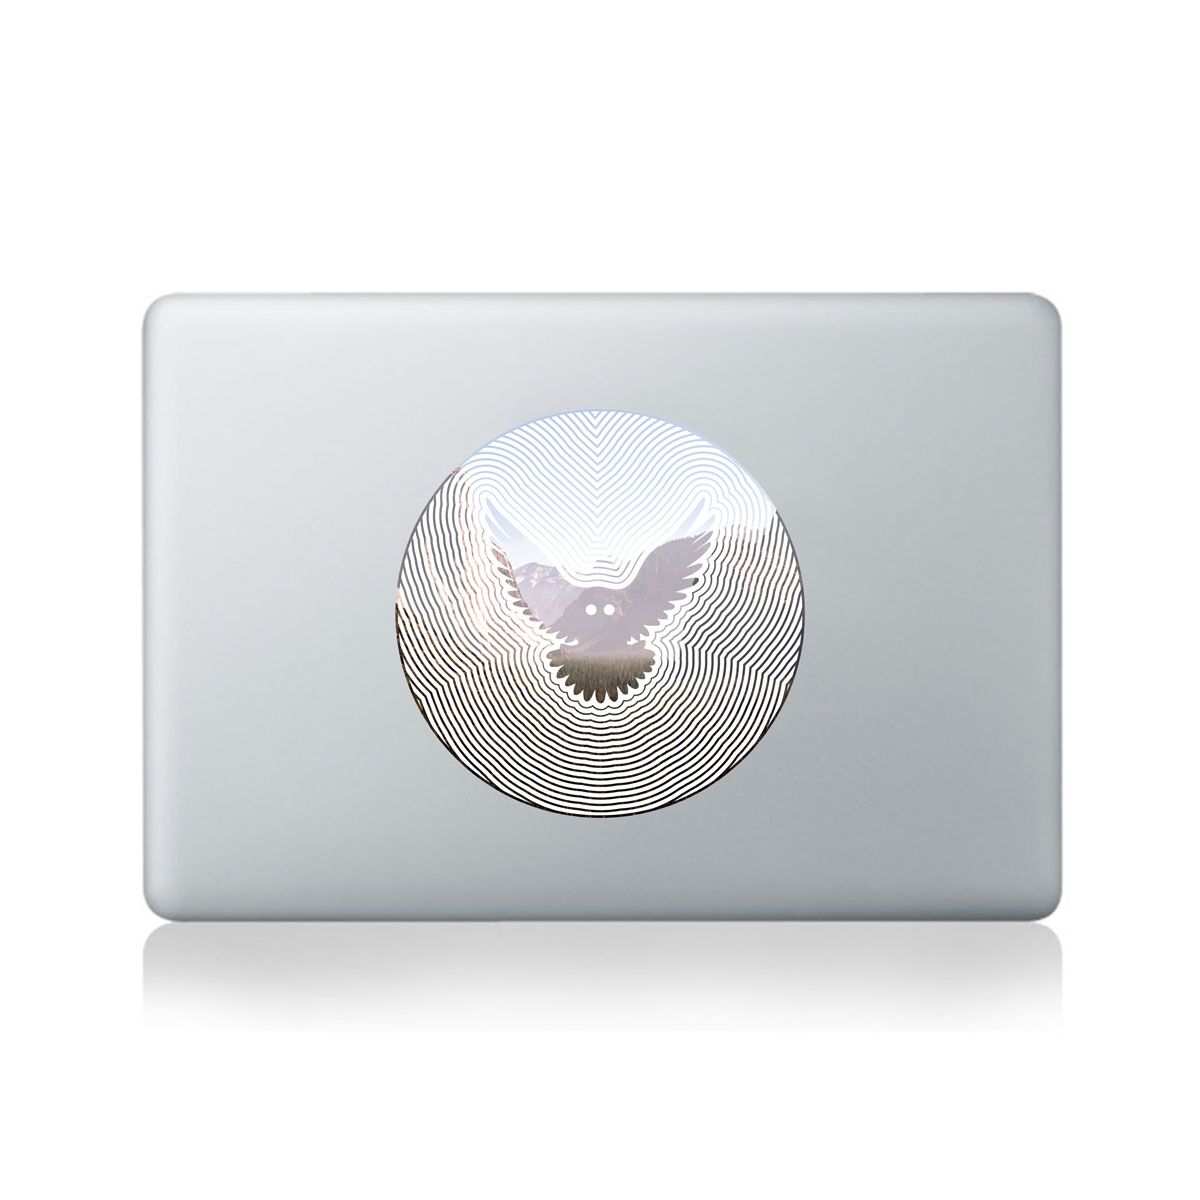 Owl Landscape Mandala Macbook Sticker